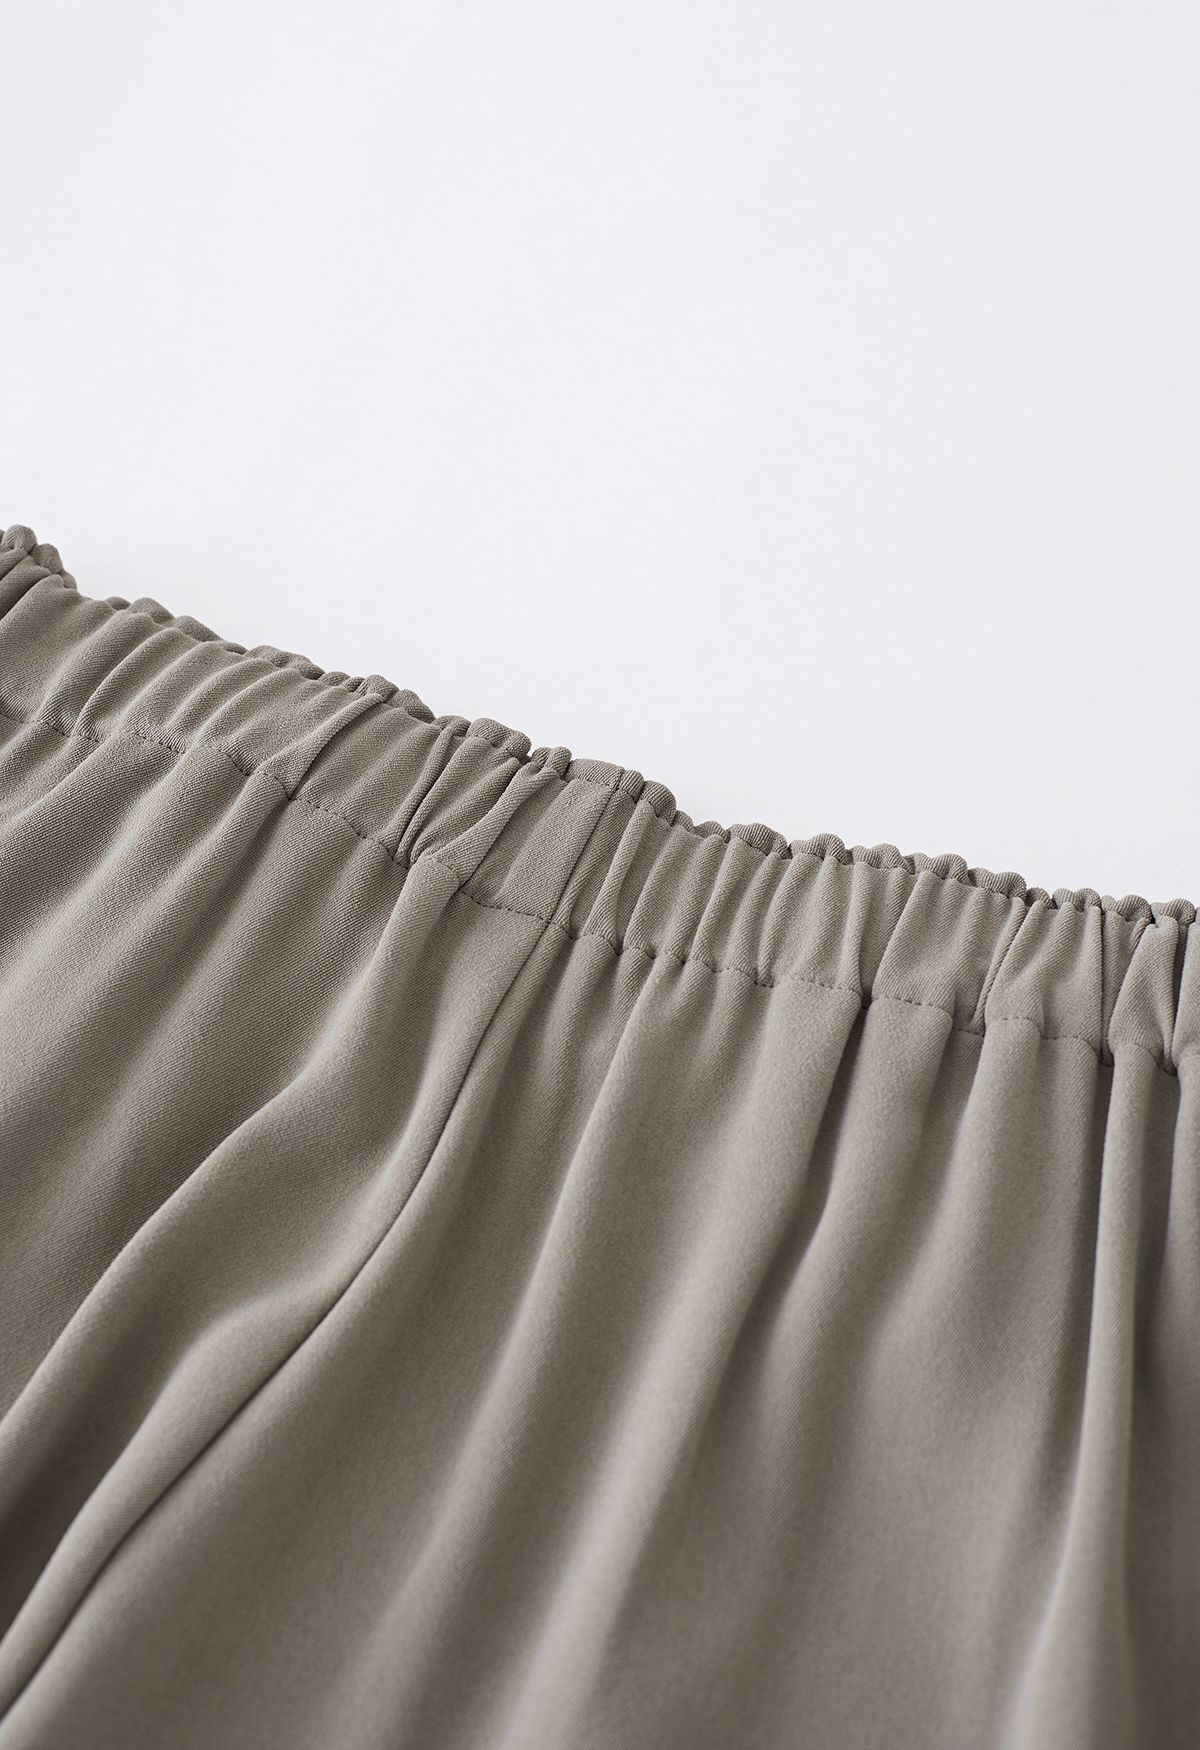 Pantalones de pierna recta plisados con cordón lateral en gris topo